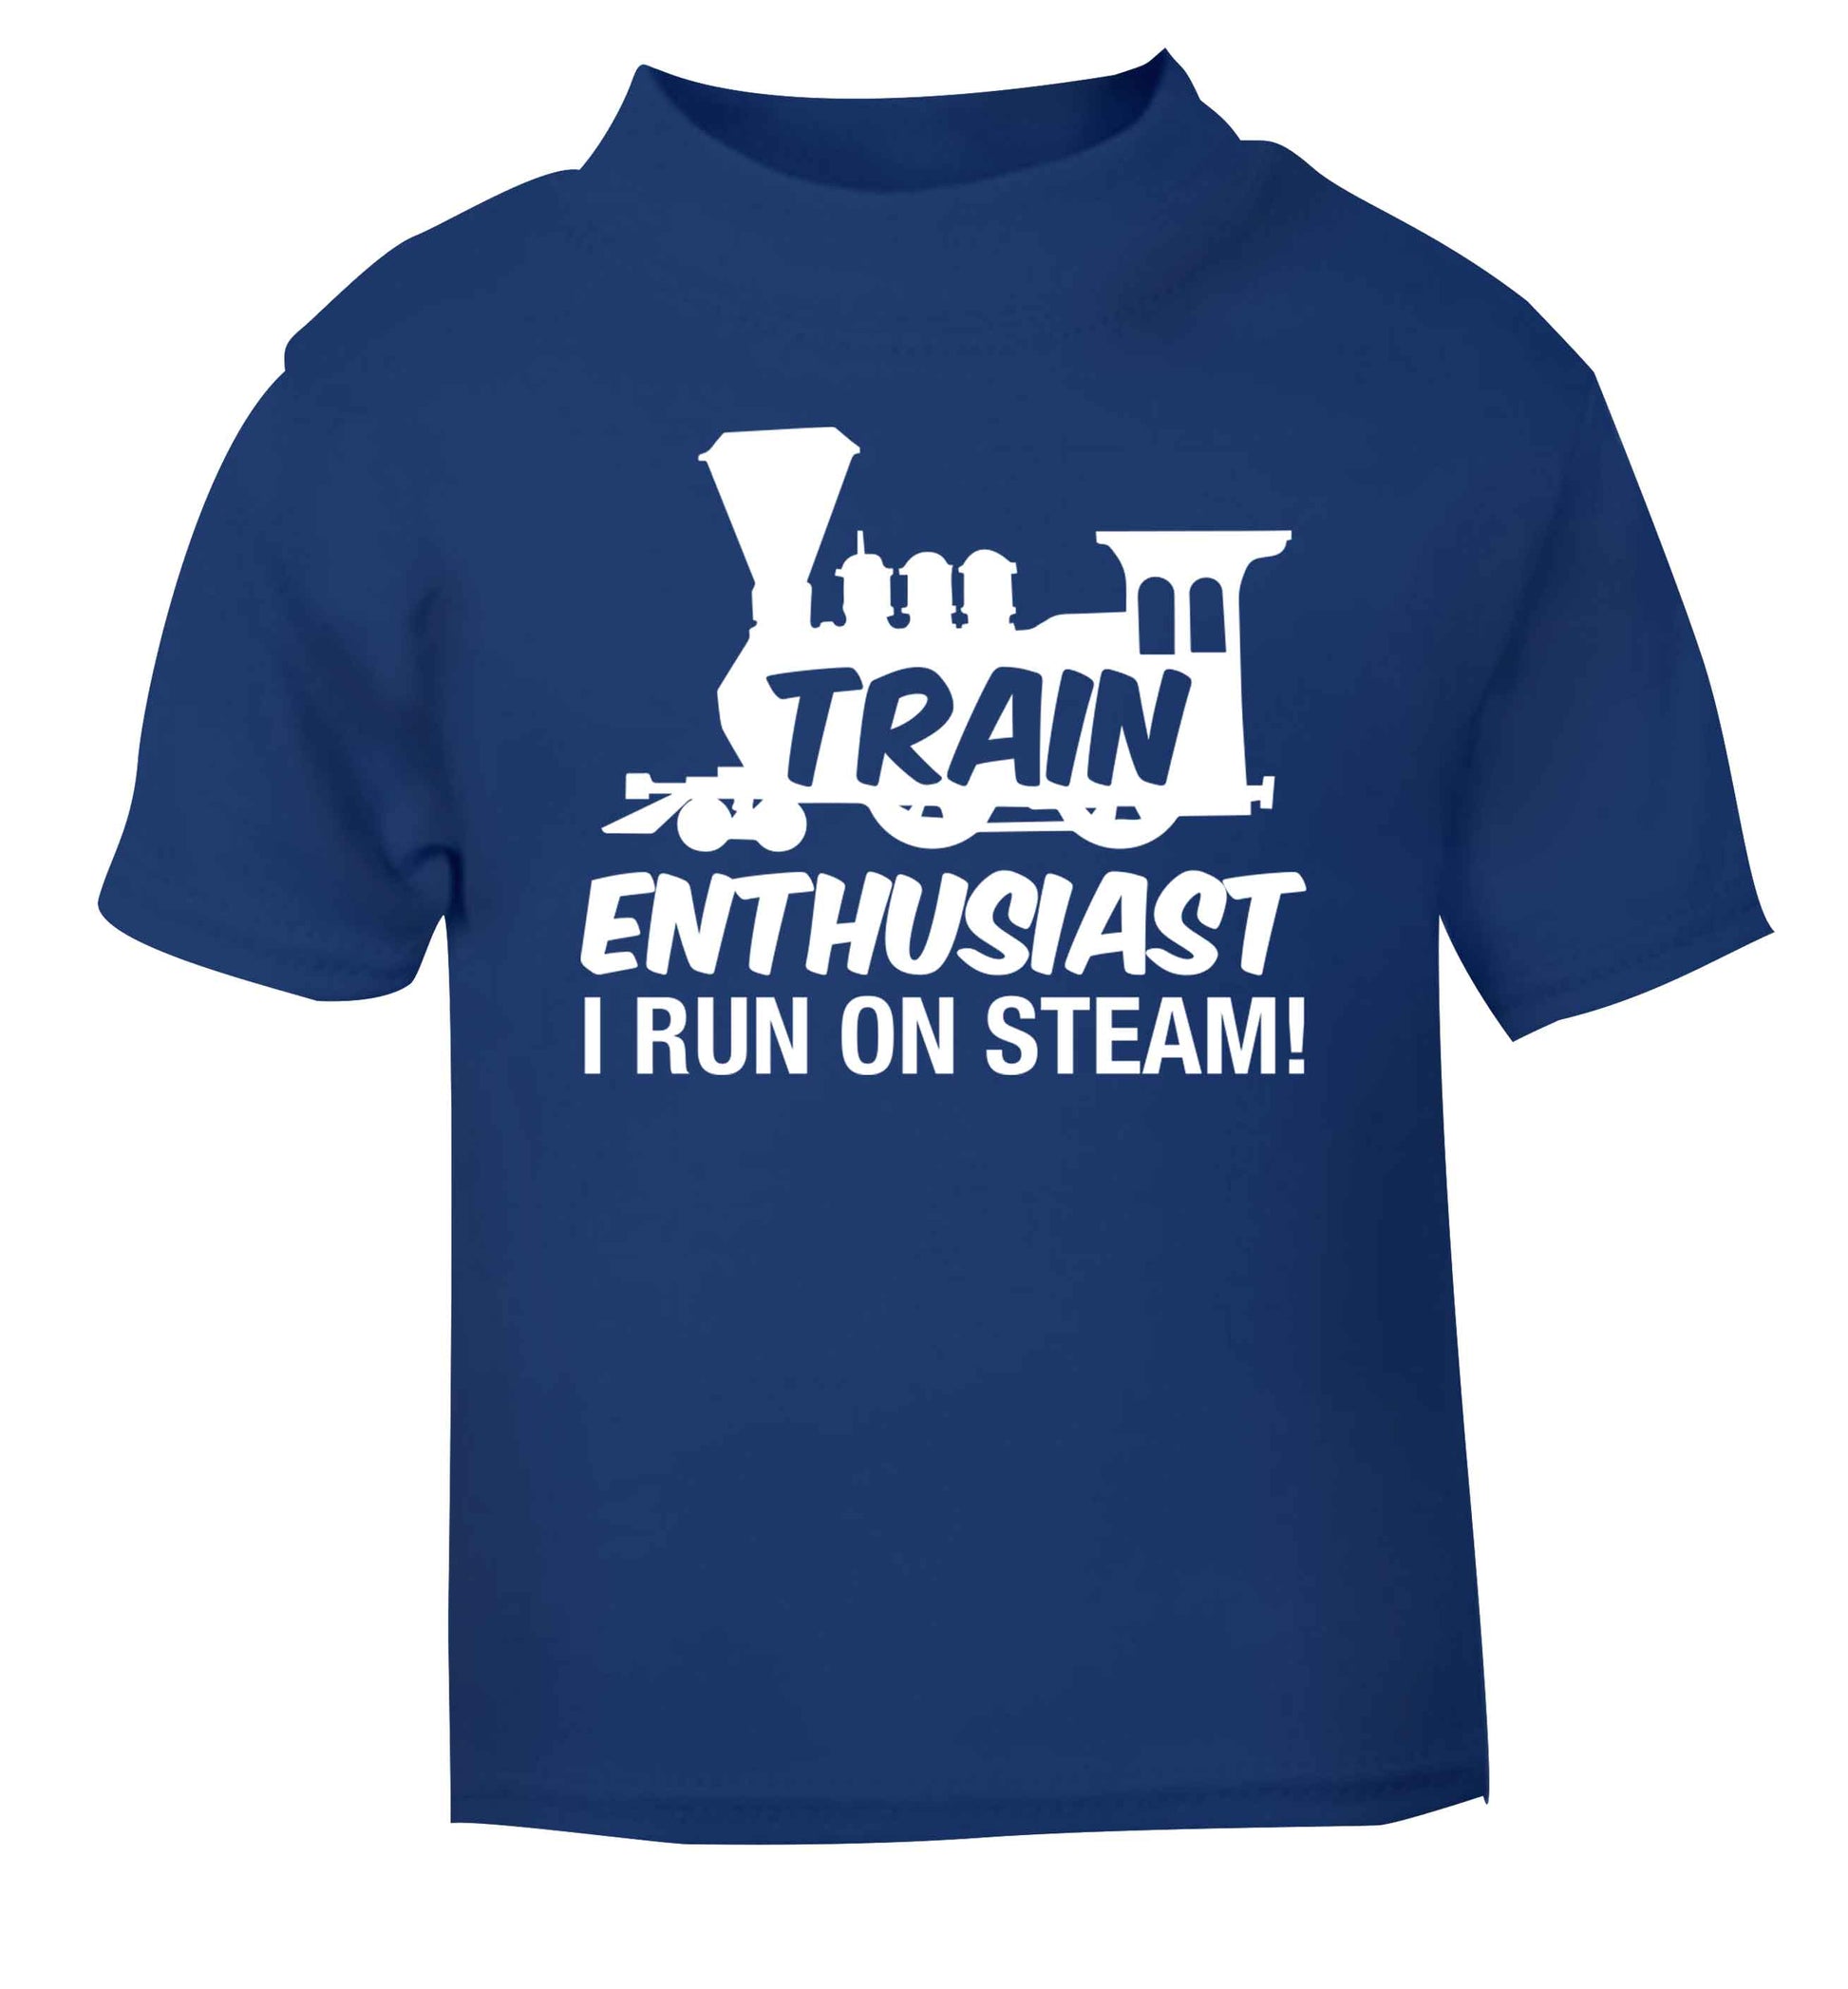 Train enthusiast I run on steam blue Baby Toddler Tshirt 2 Years